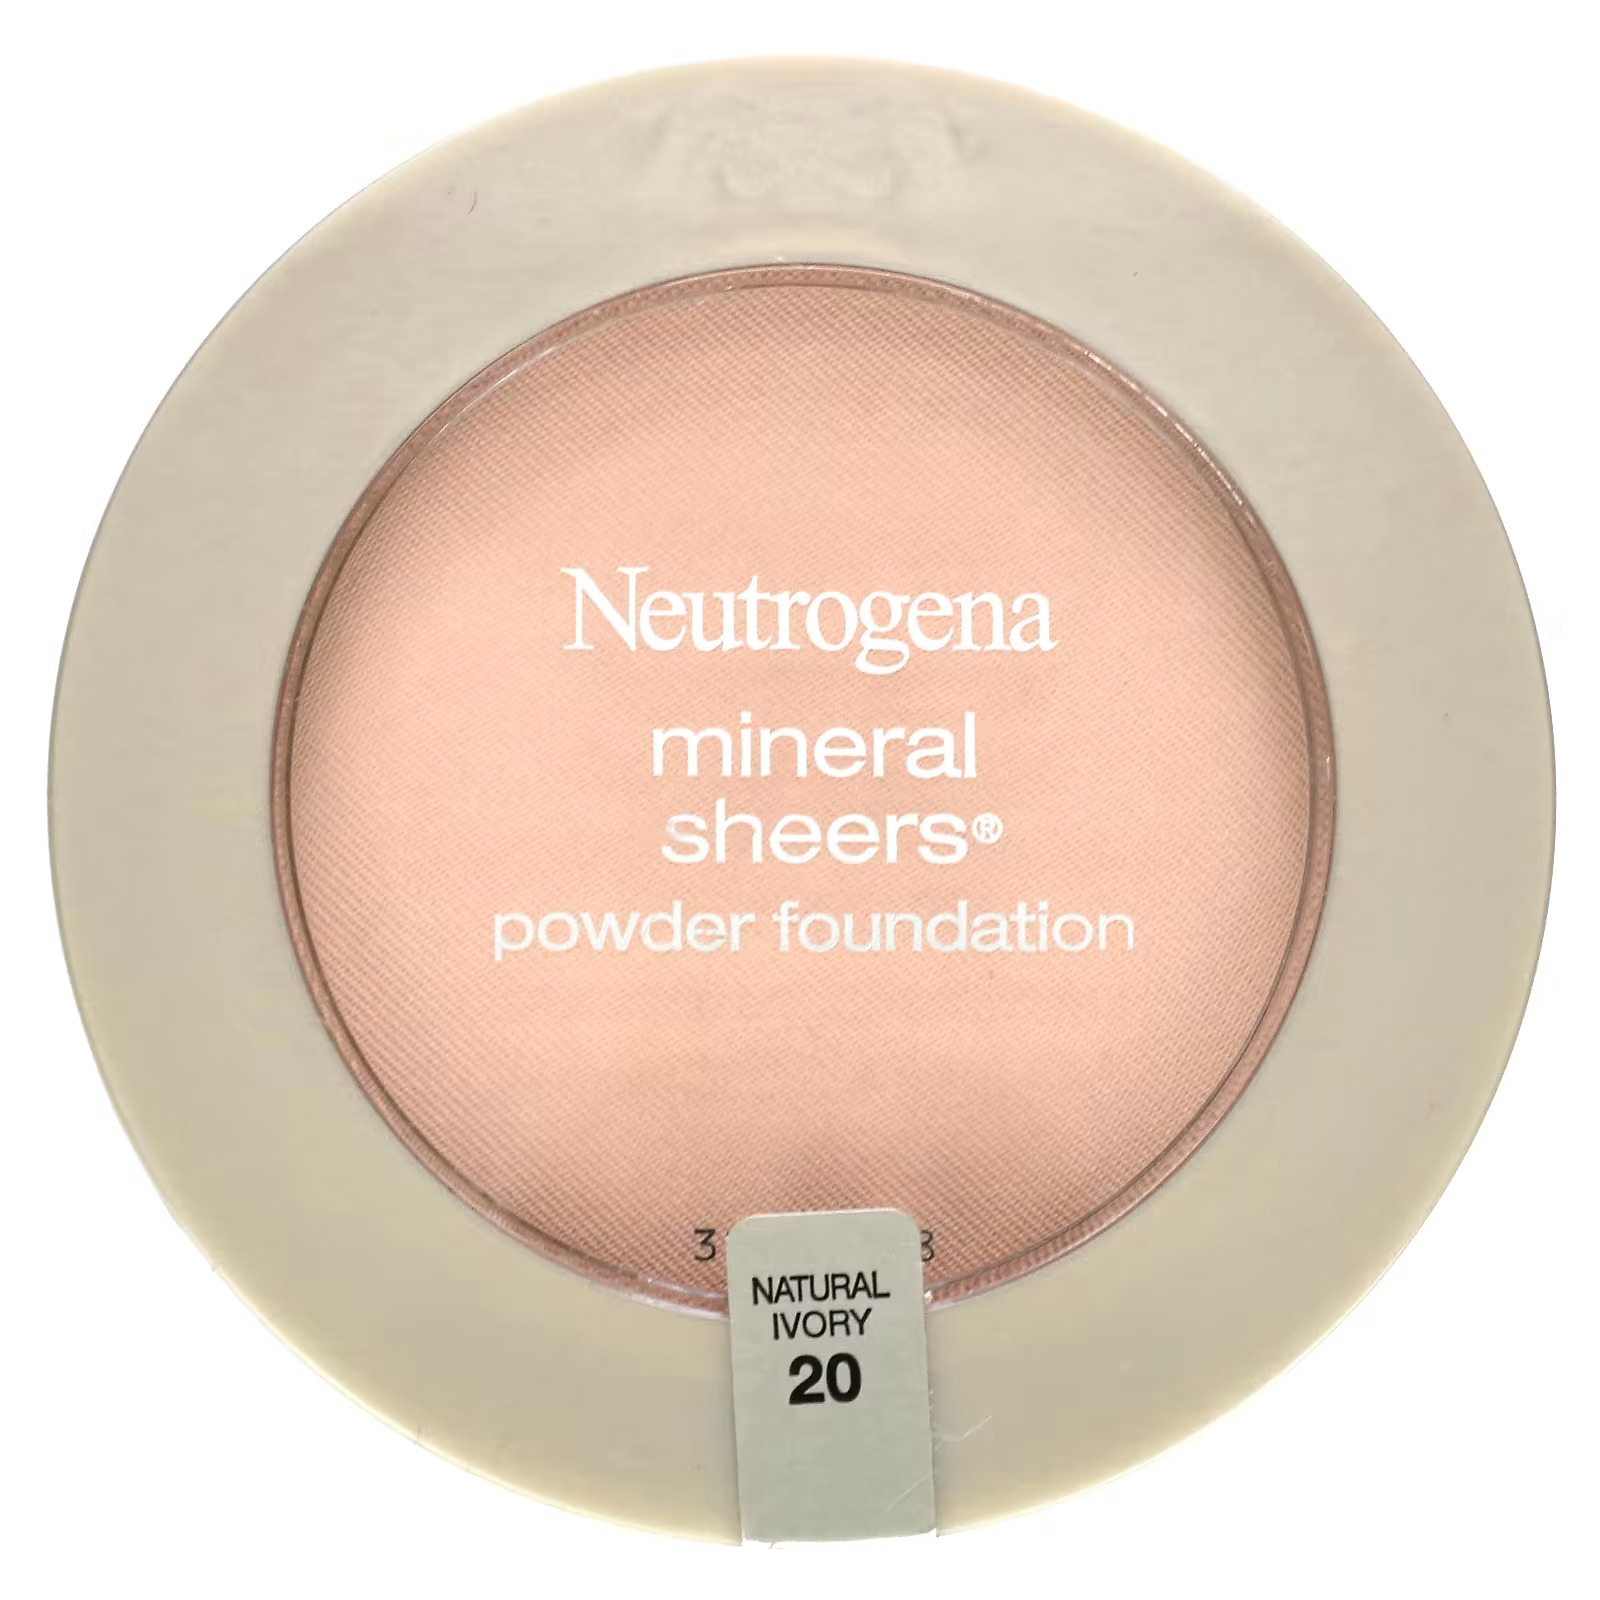 Neutrogena Mineral Sheers Powder Foundation Natural Ivory 20 0,34 унции (9,6 г) neutrogena mineral sheers тональная пудра бафф 30 9 6 г 0 34 унции